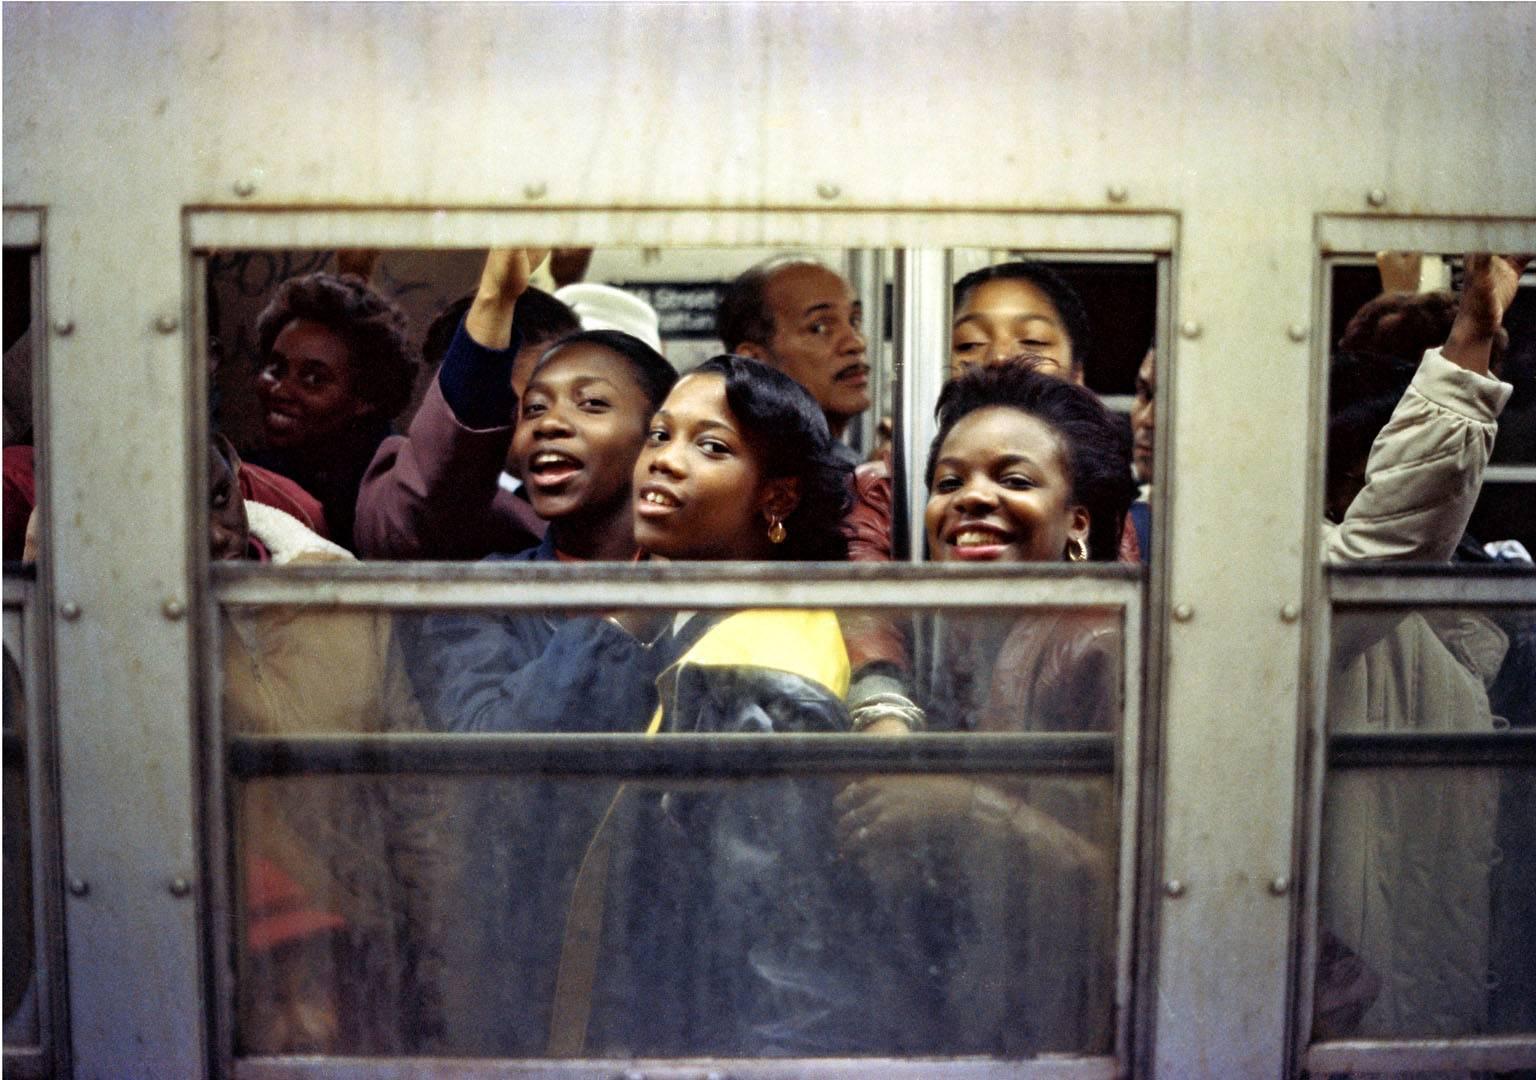 Jamel Shabazz Portrait Photograph - Rush Hour NYC